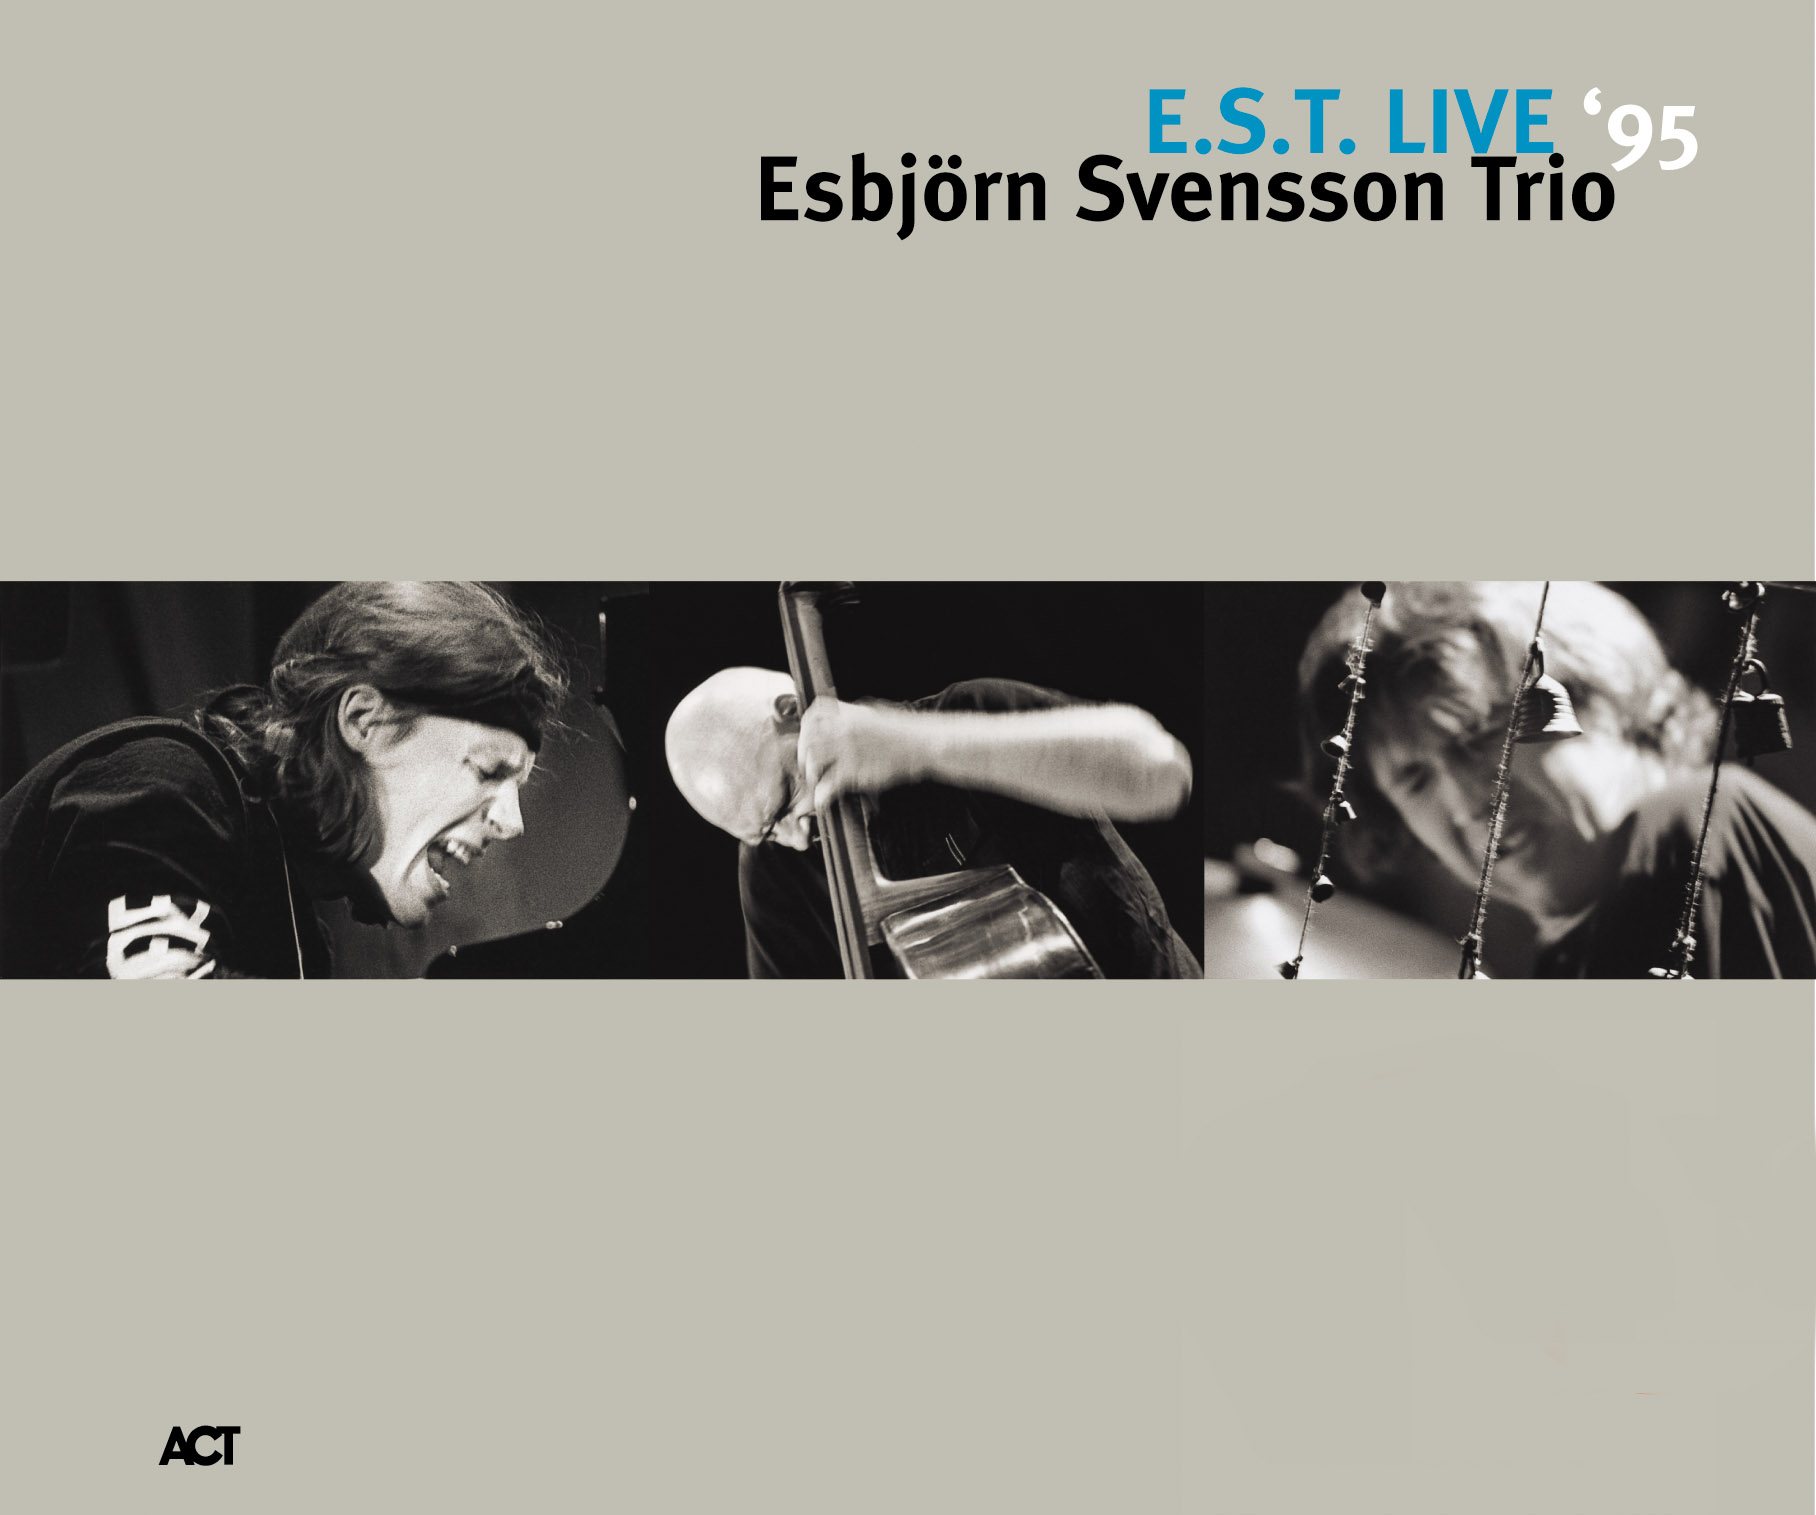 Esbjorn Svensson Trio Pics, Music Collection